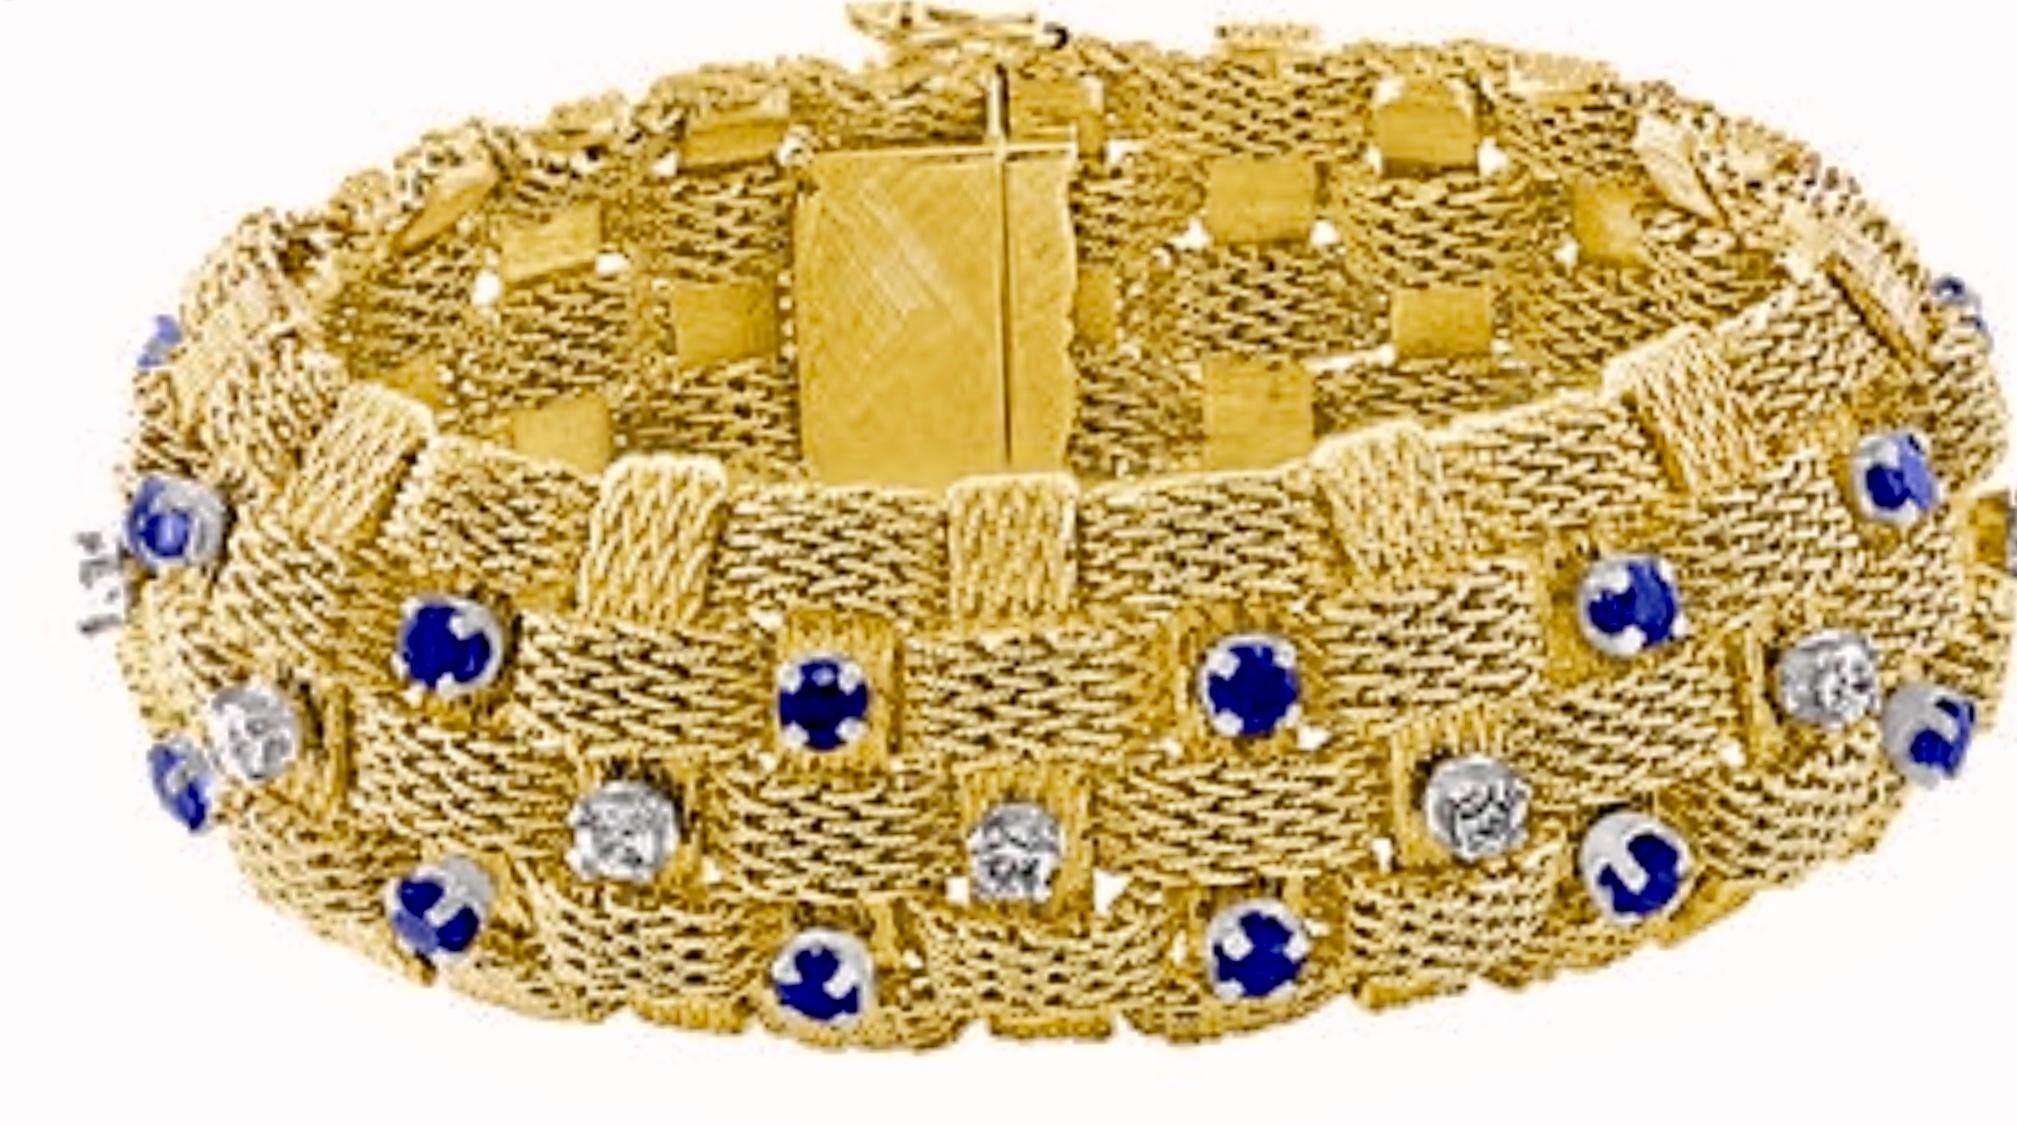 Round Cut 3 Carat Sapphire and 2 Carat Diamond Bracelet in 18 Karat Yellow Gold 116 Gm For Sale